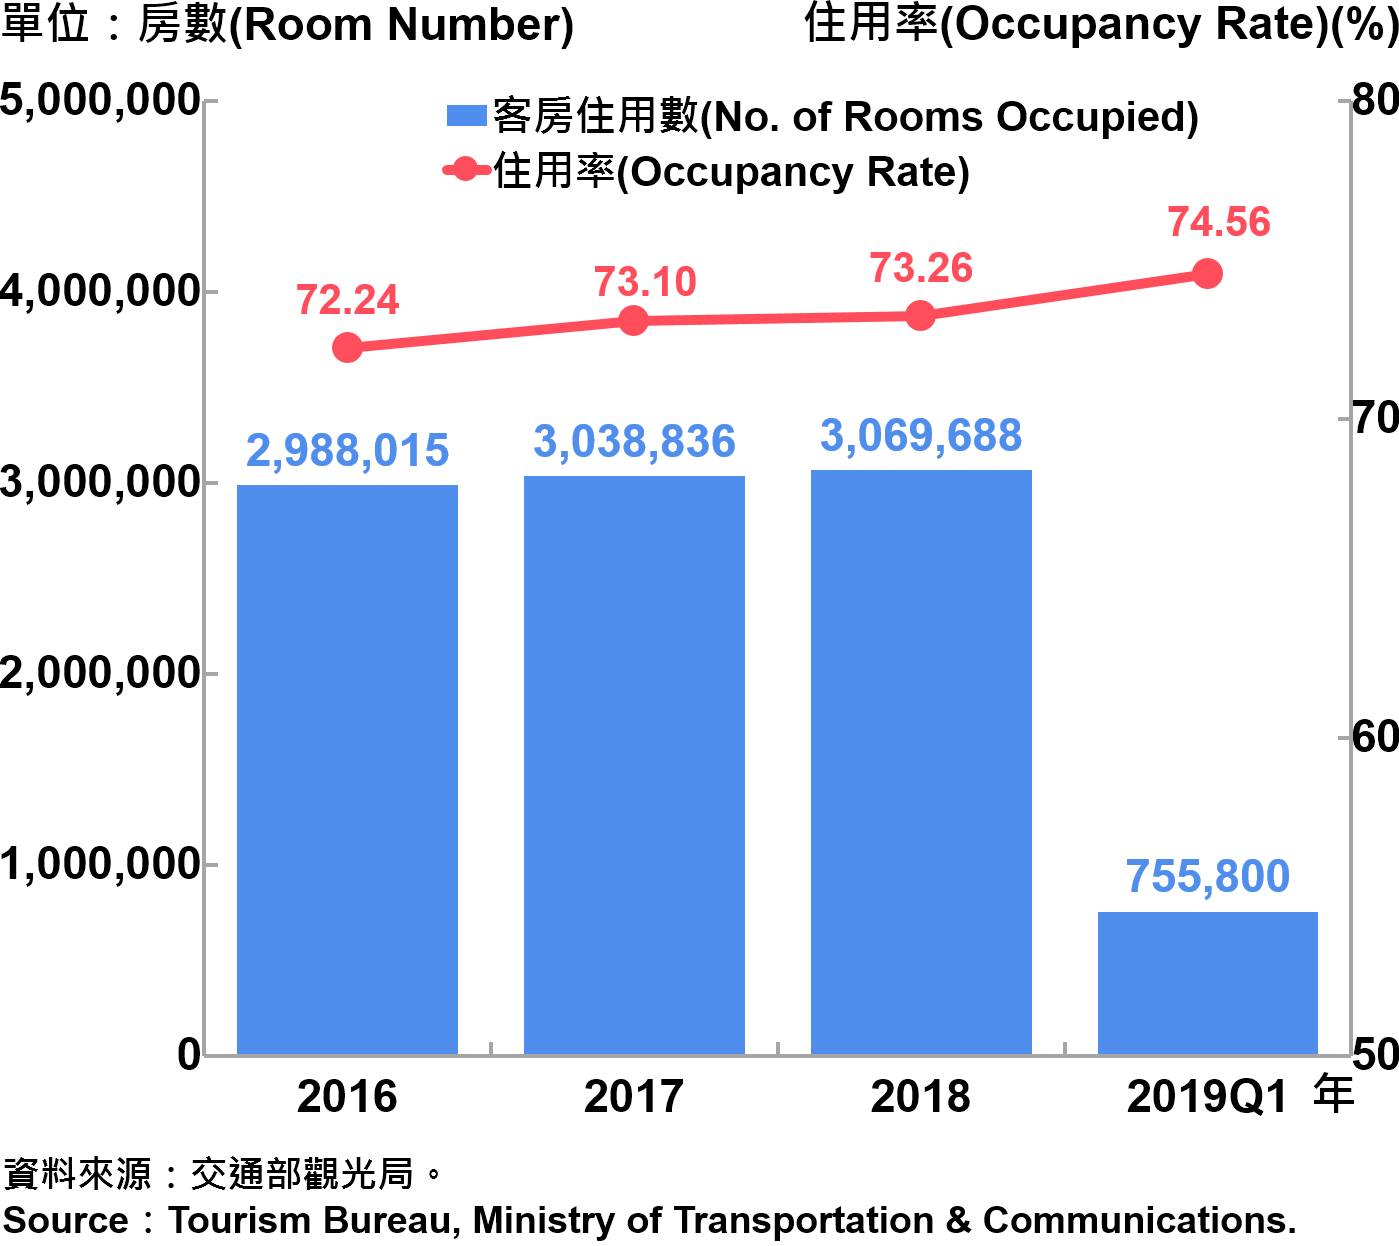 臺北市觀光旅館客房住用率統計—2019Q1 Room Occupancy Rate of Tourist Hotel in Taipei City—2019Q1